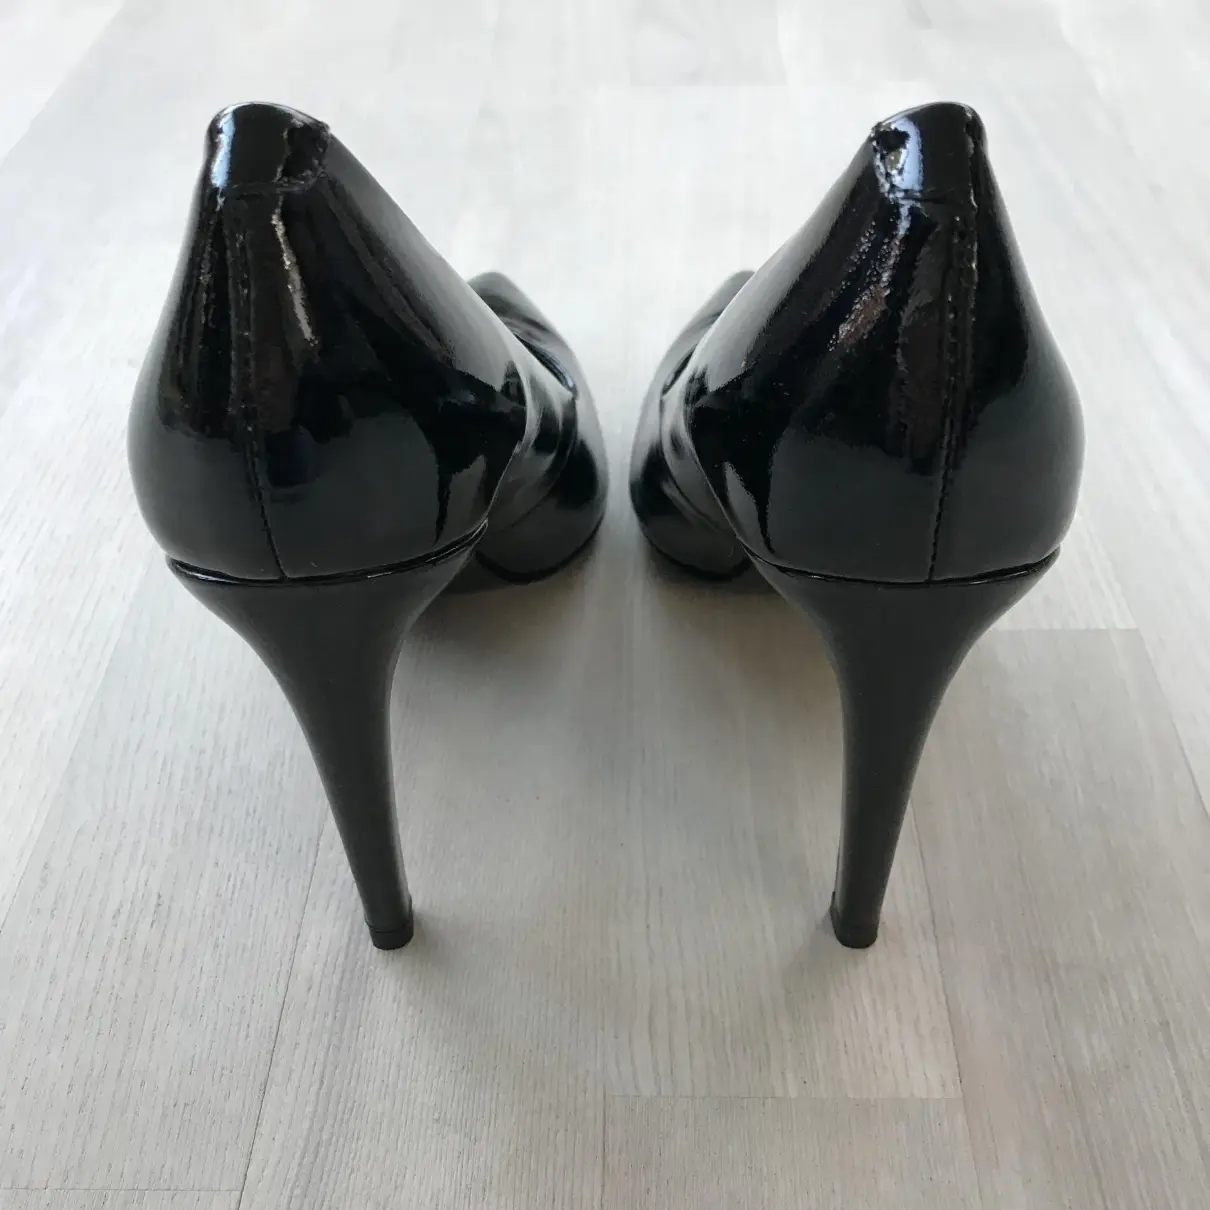 Buy Tiger Of Sweden Patent leather heels online